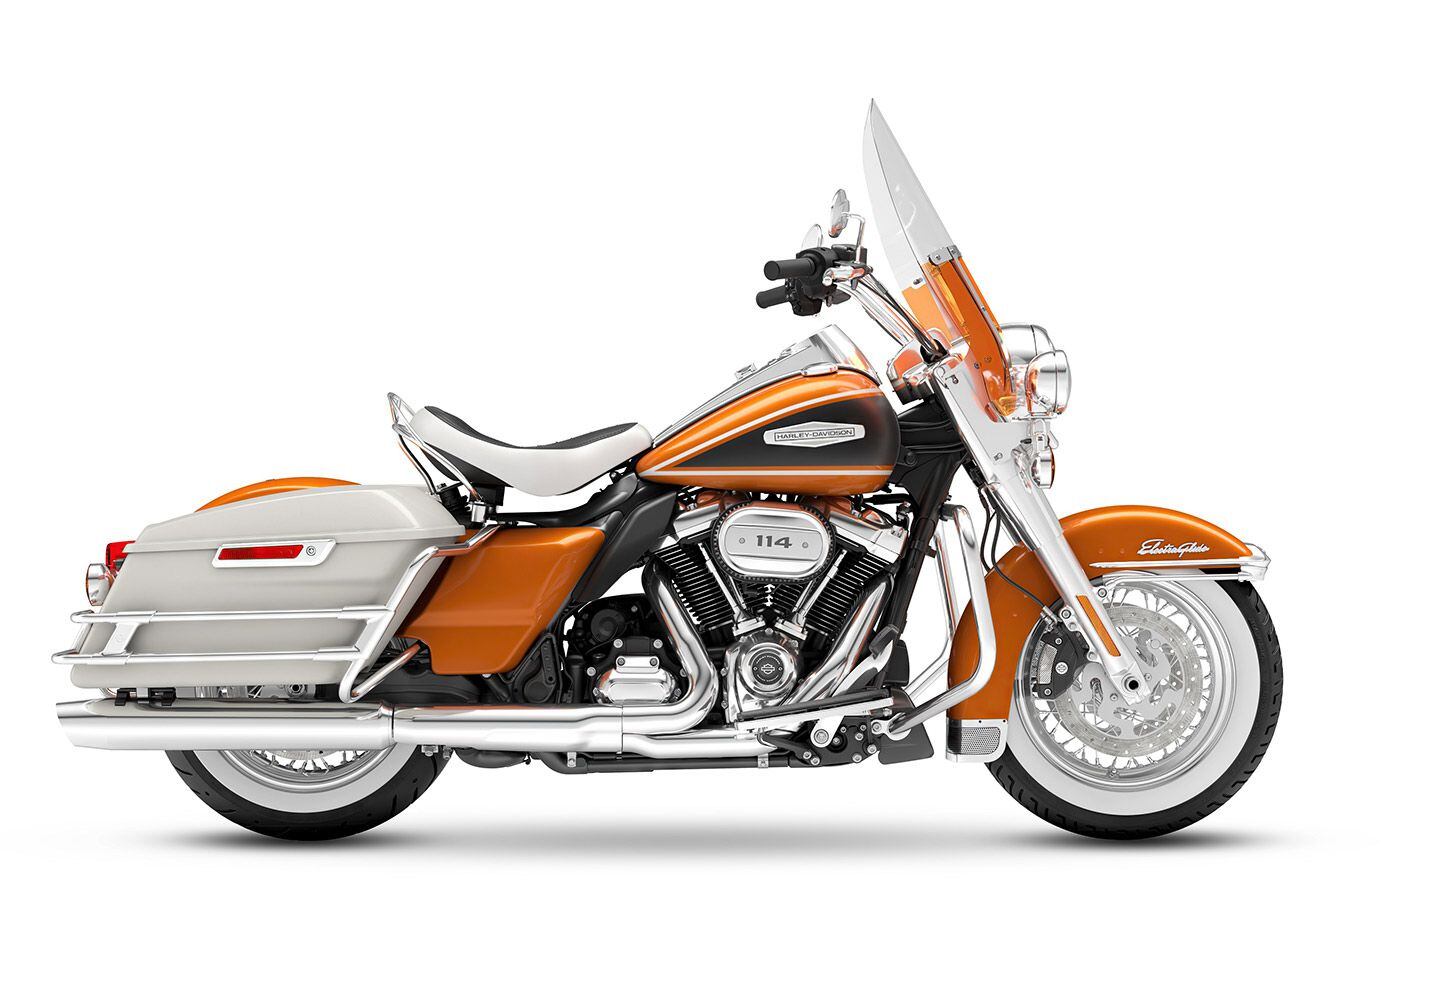 2019 Harley-Davidson Electra Glide Standard First Look